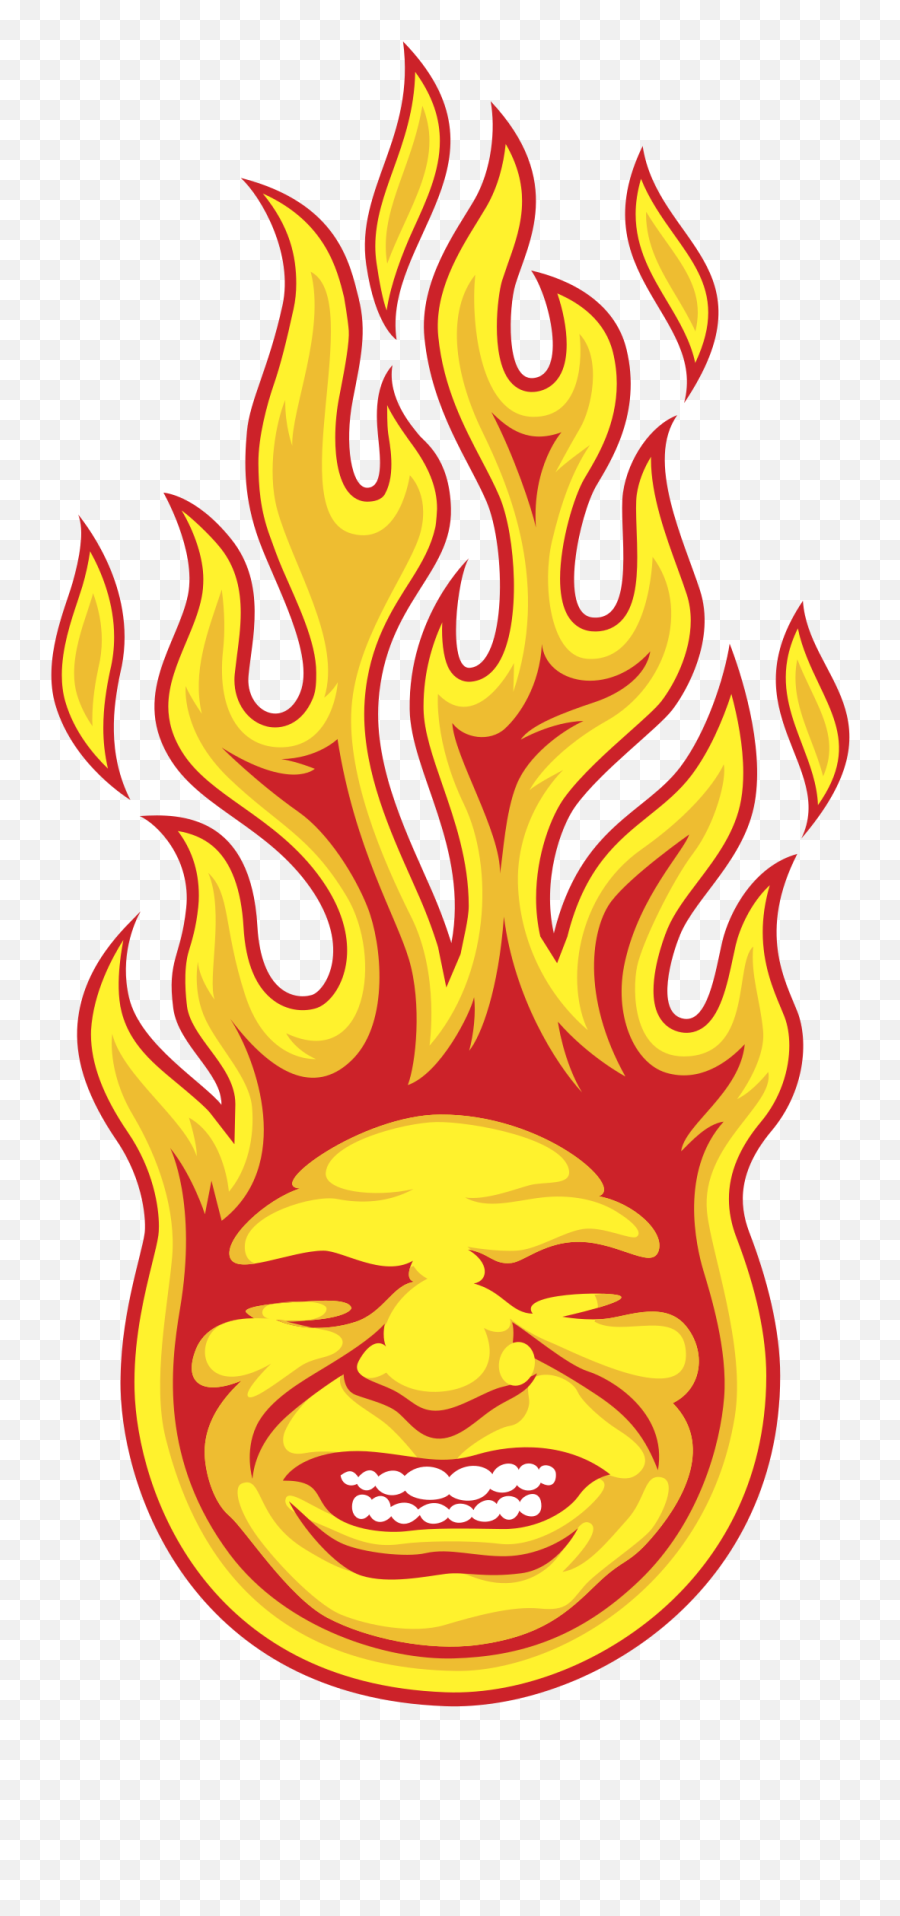 Fire Giant Logo Png Transparent U0026 Svg Vector - Freebie Supply Fire Emoji,Fire Logos